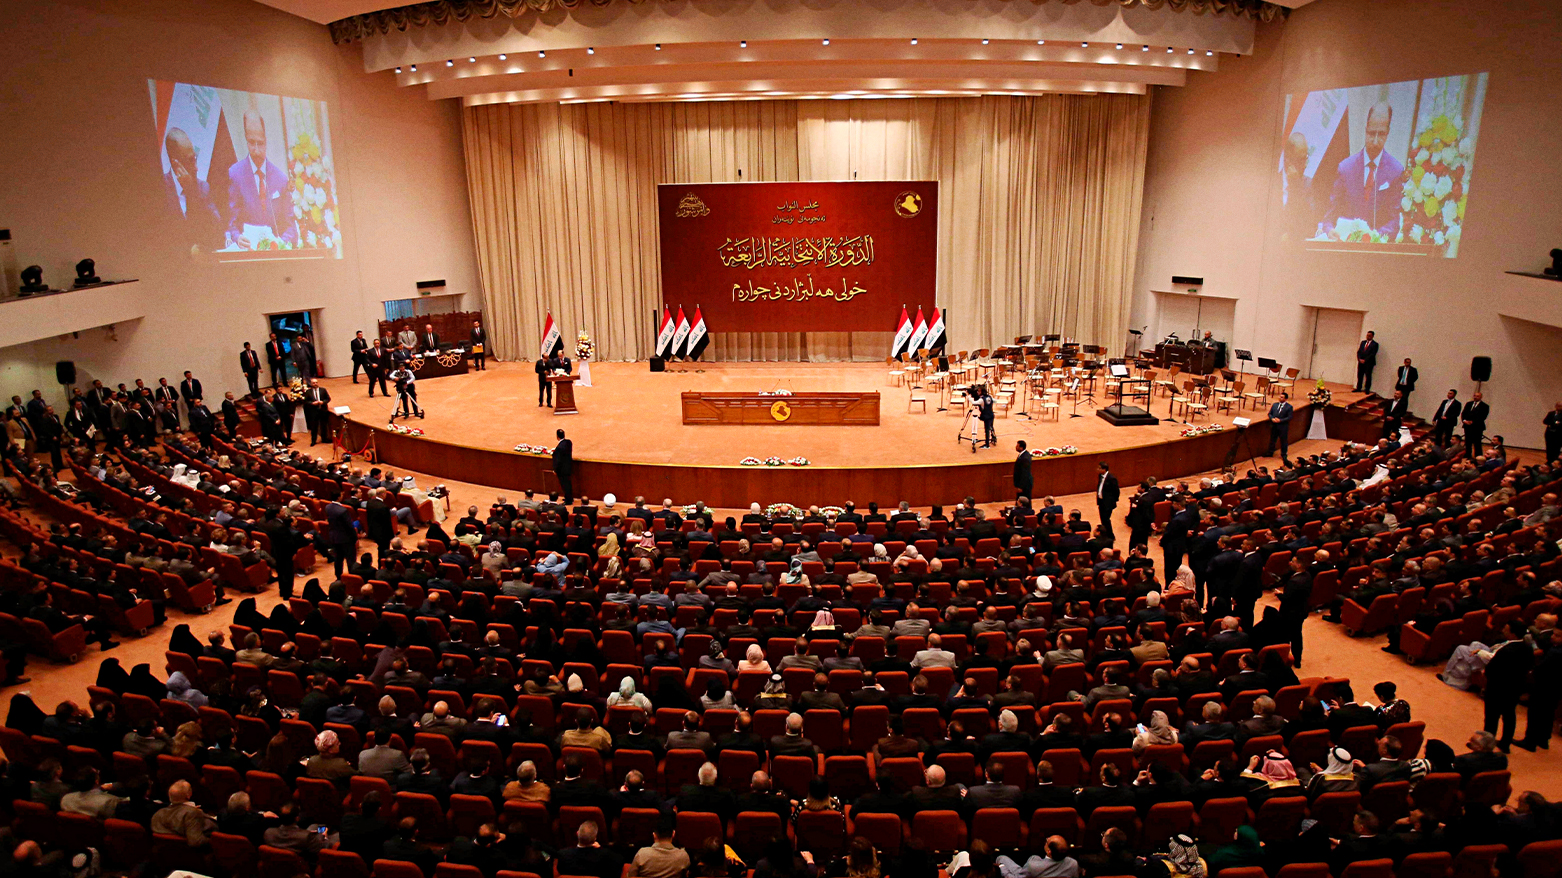 PM Barzani Hungarian President address Middle East instability